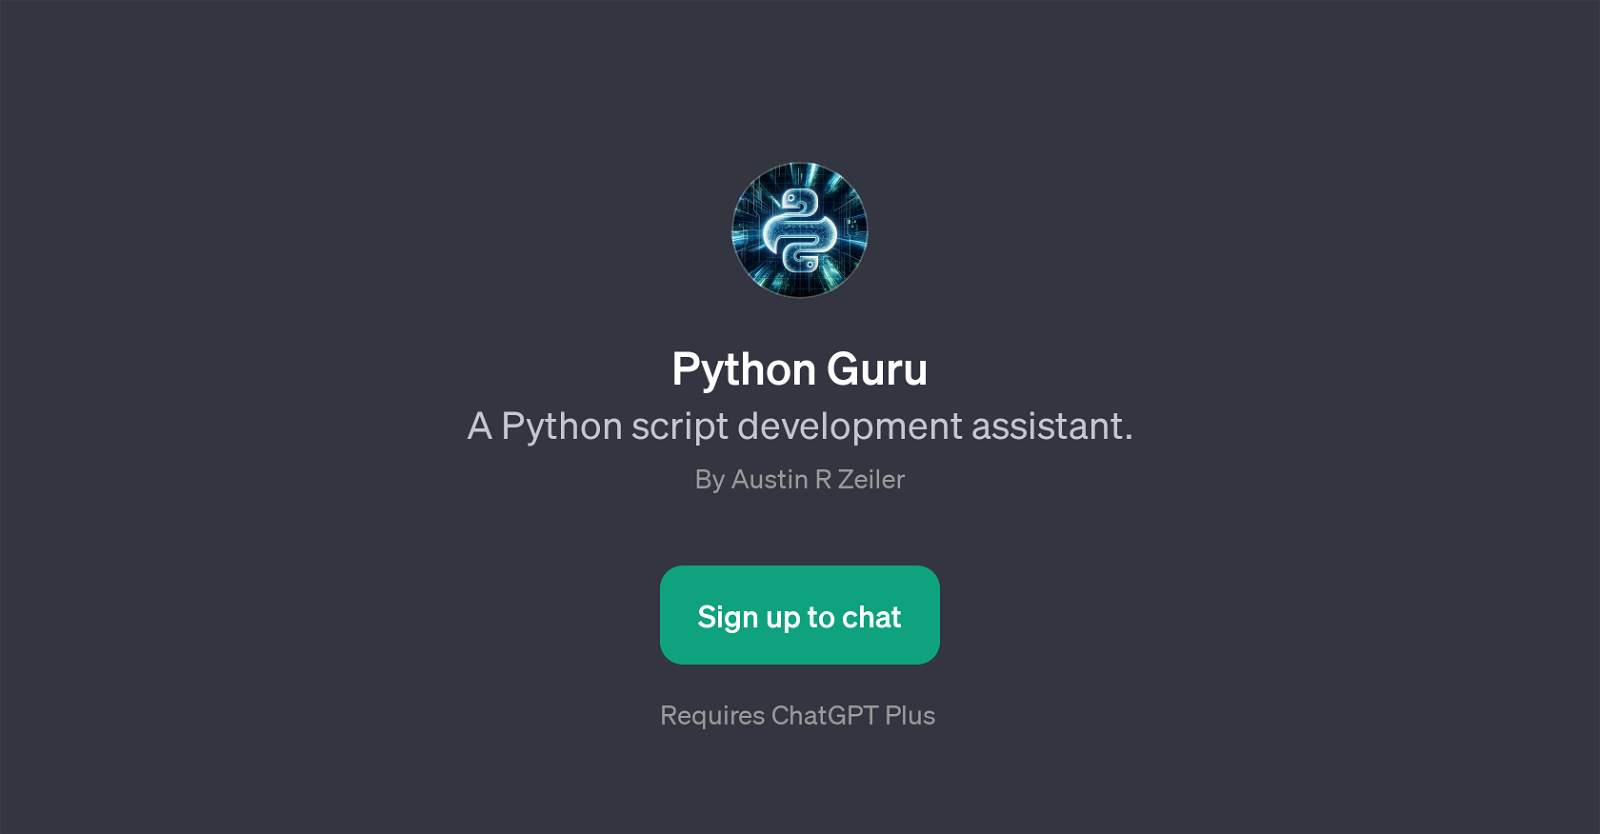 Python Guru website